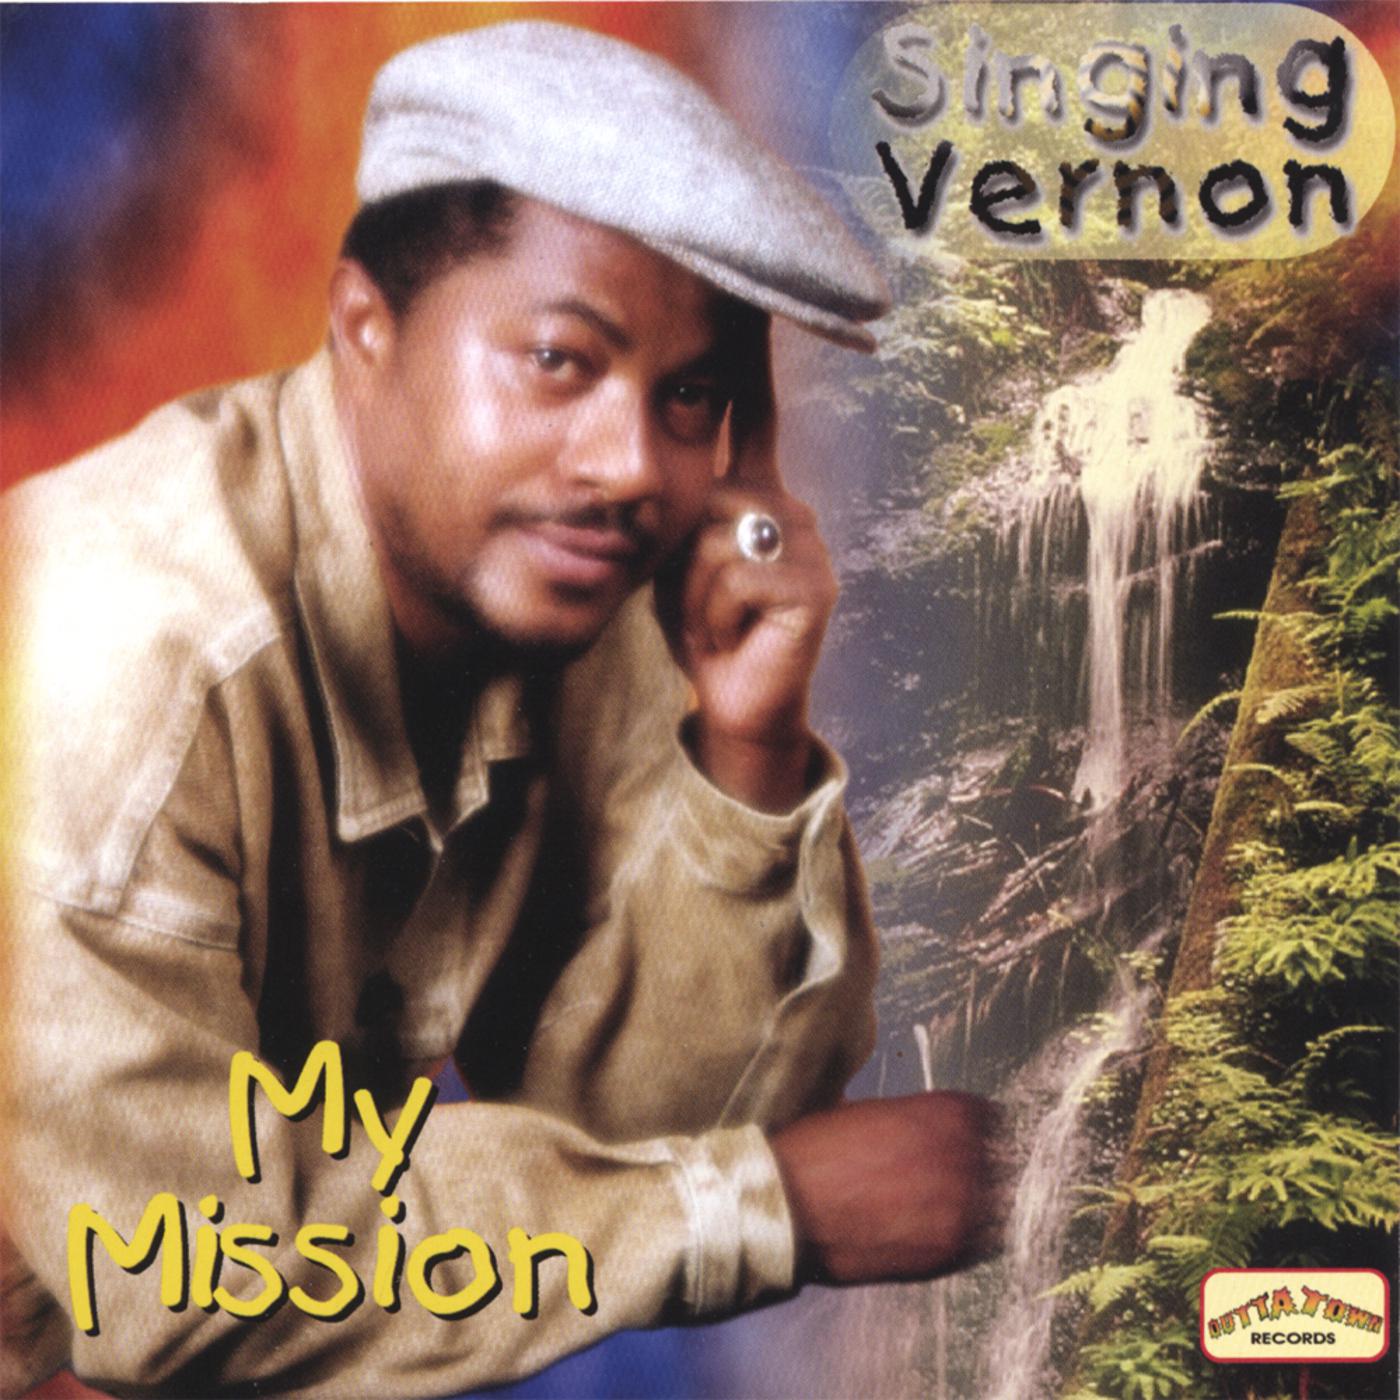 Singing Vernon - My Mission